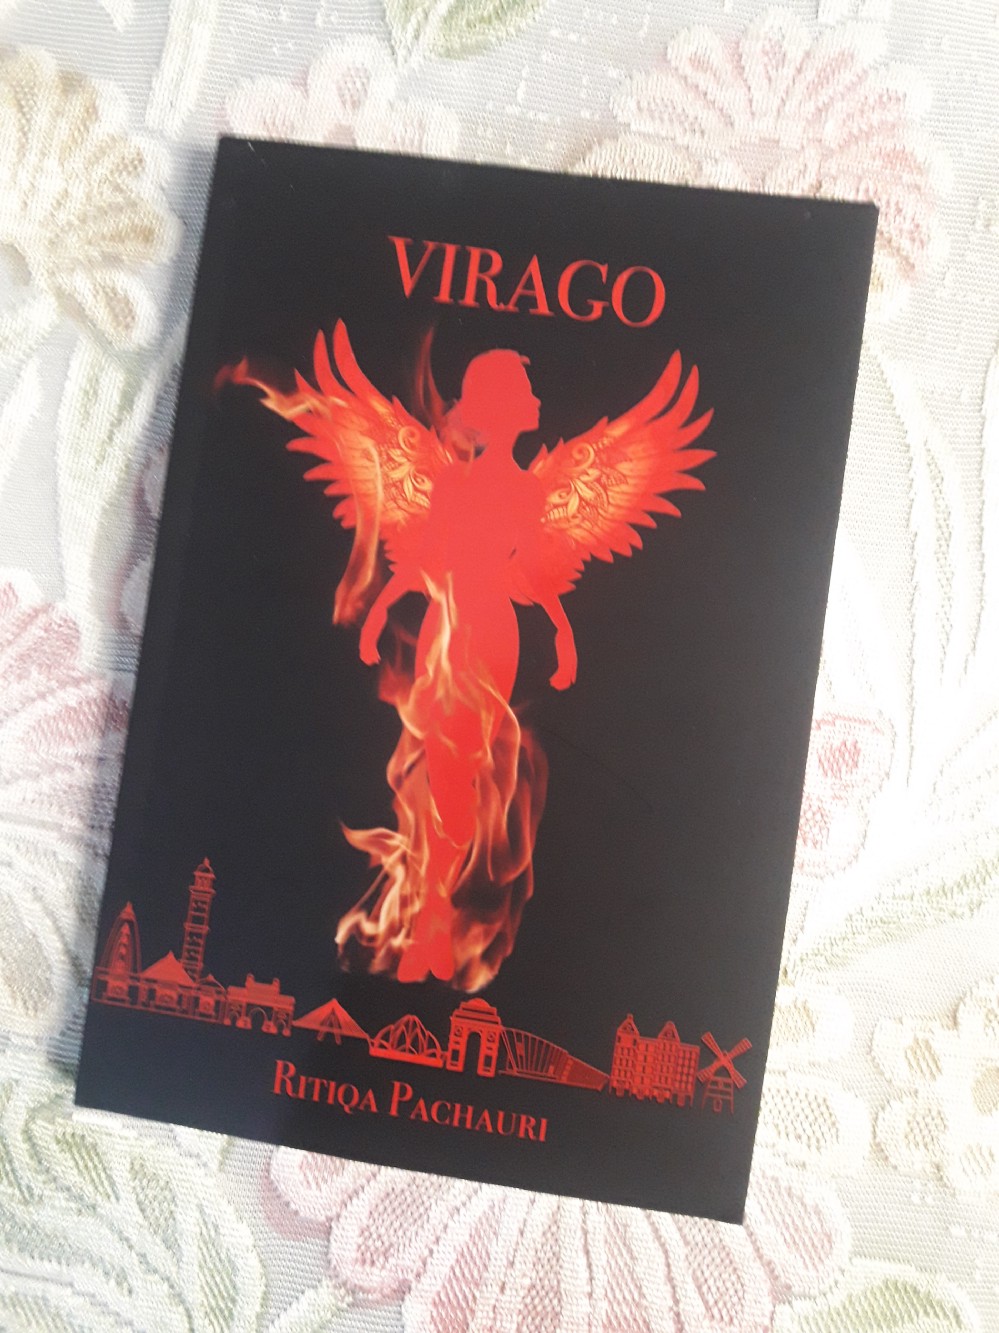 virago herstory download free